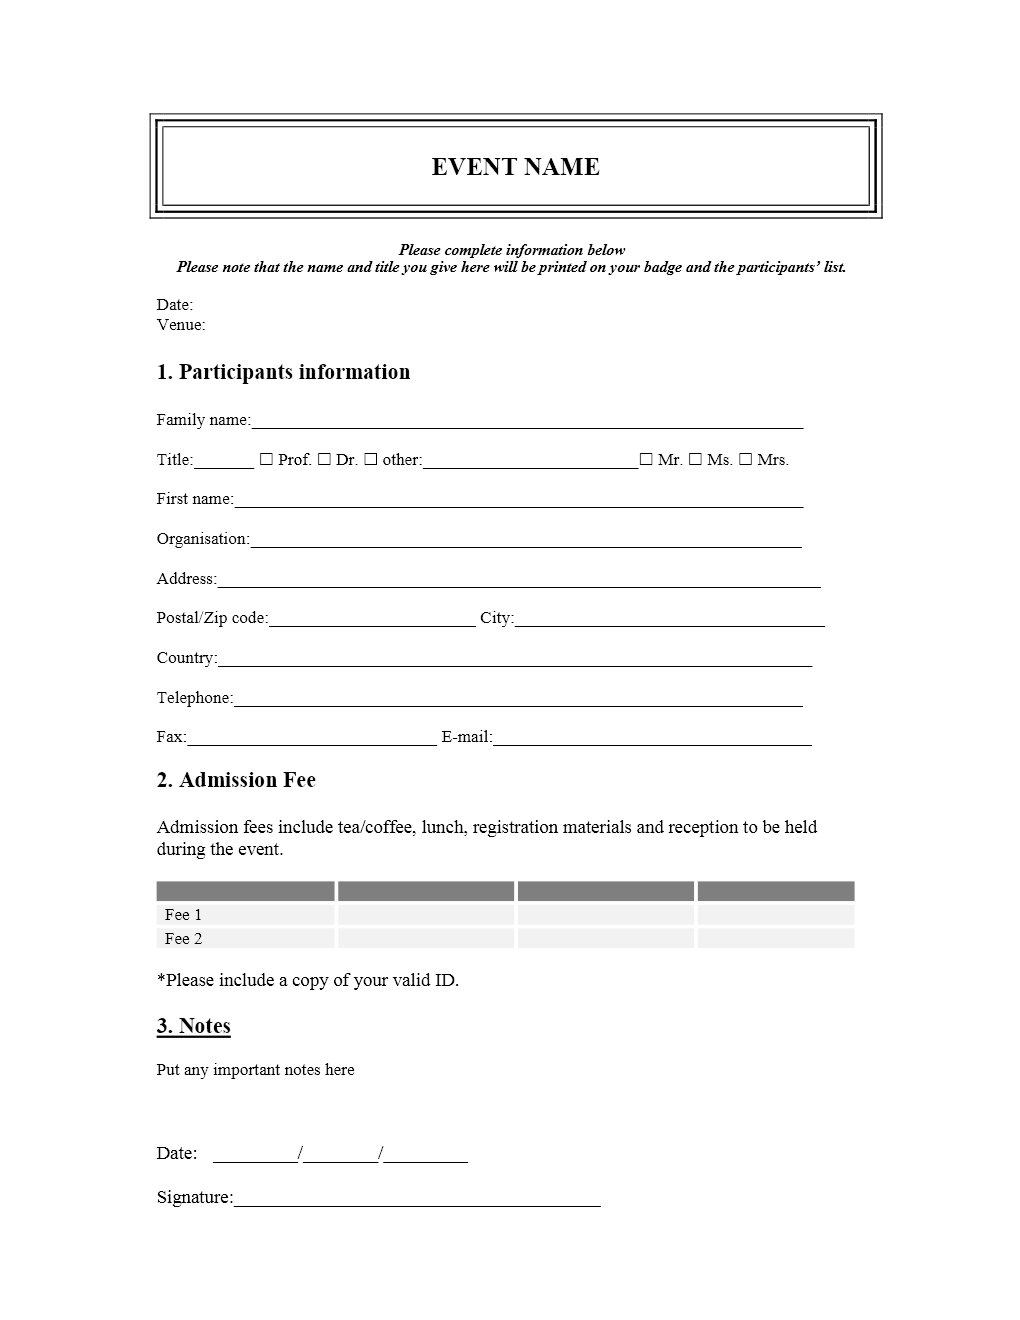 Seminar Participation Registration Form Template For Your Regarding Seminar Registration Form Template Word